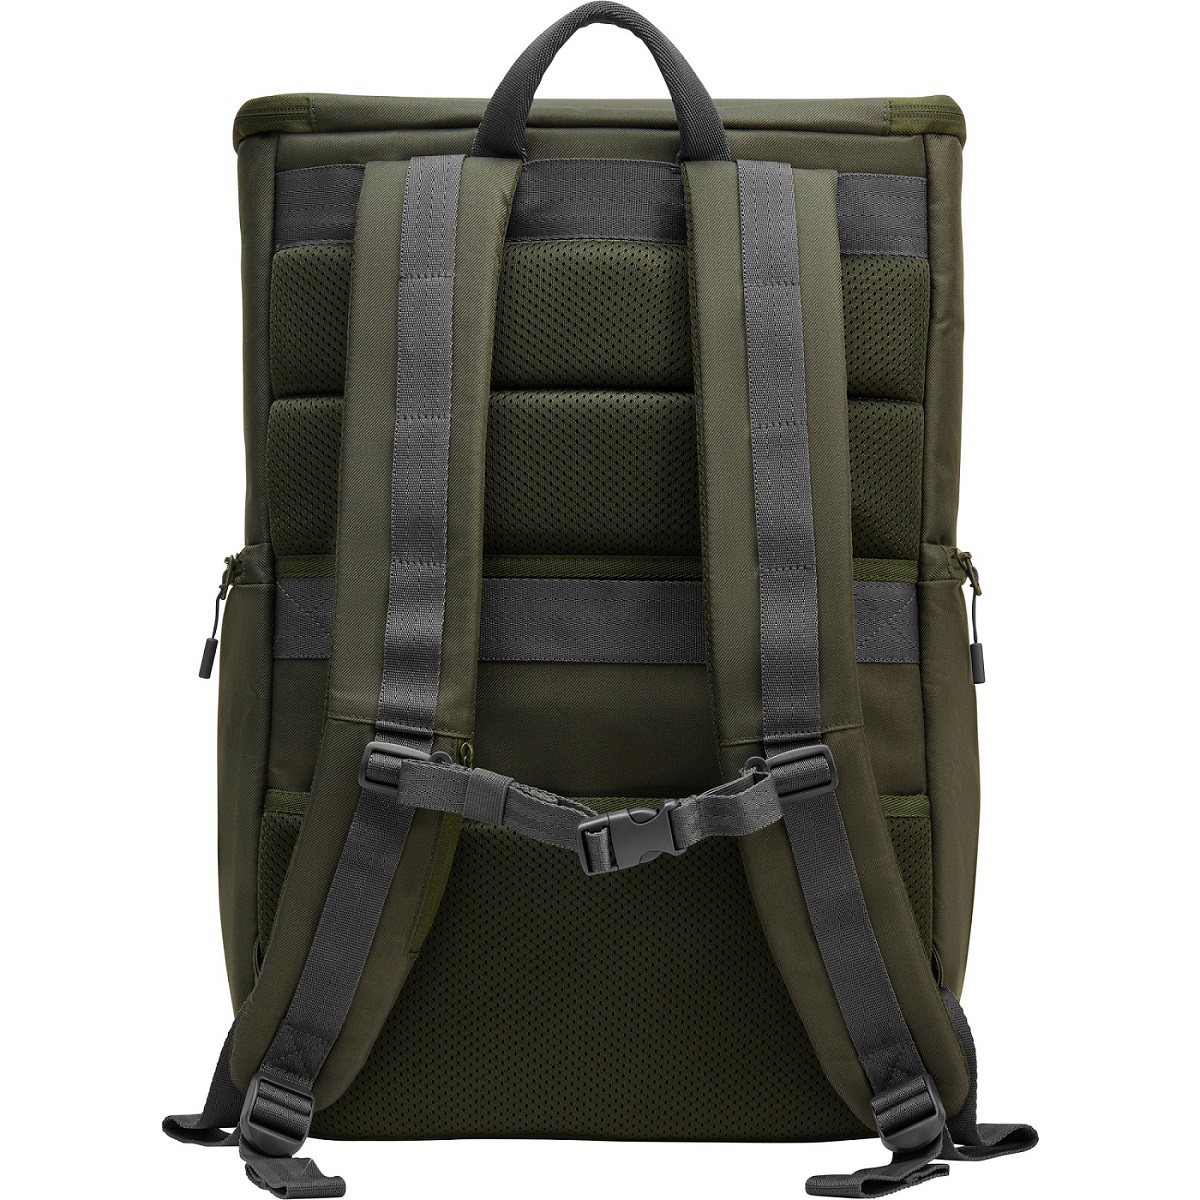 HP 15.6 Modular Laptop Backpack 